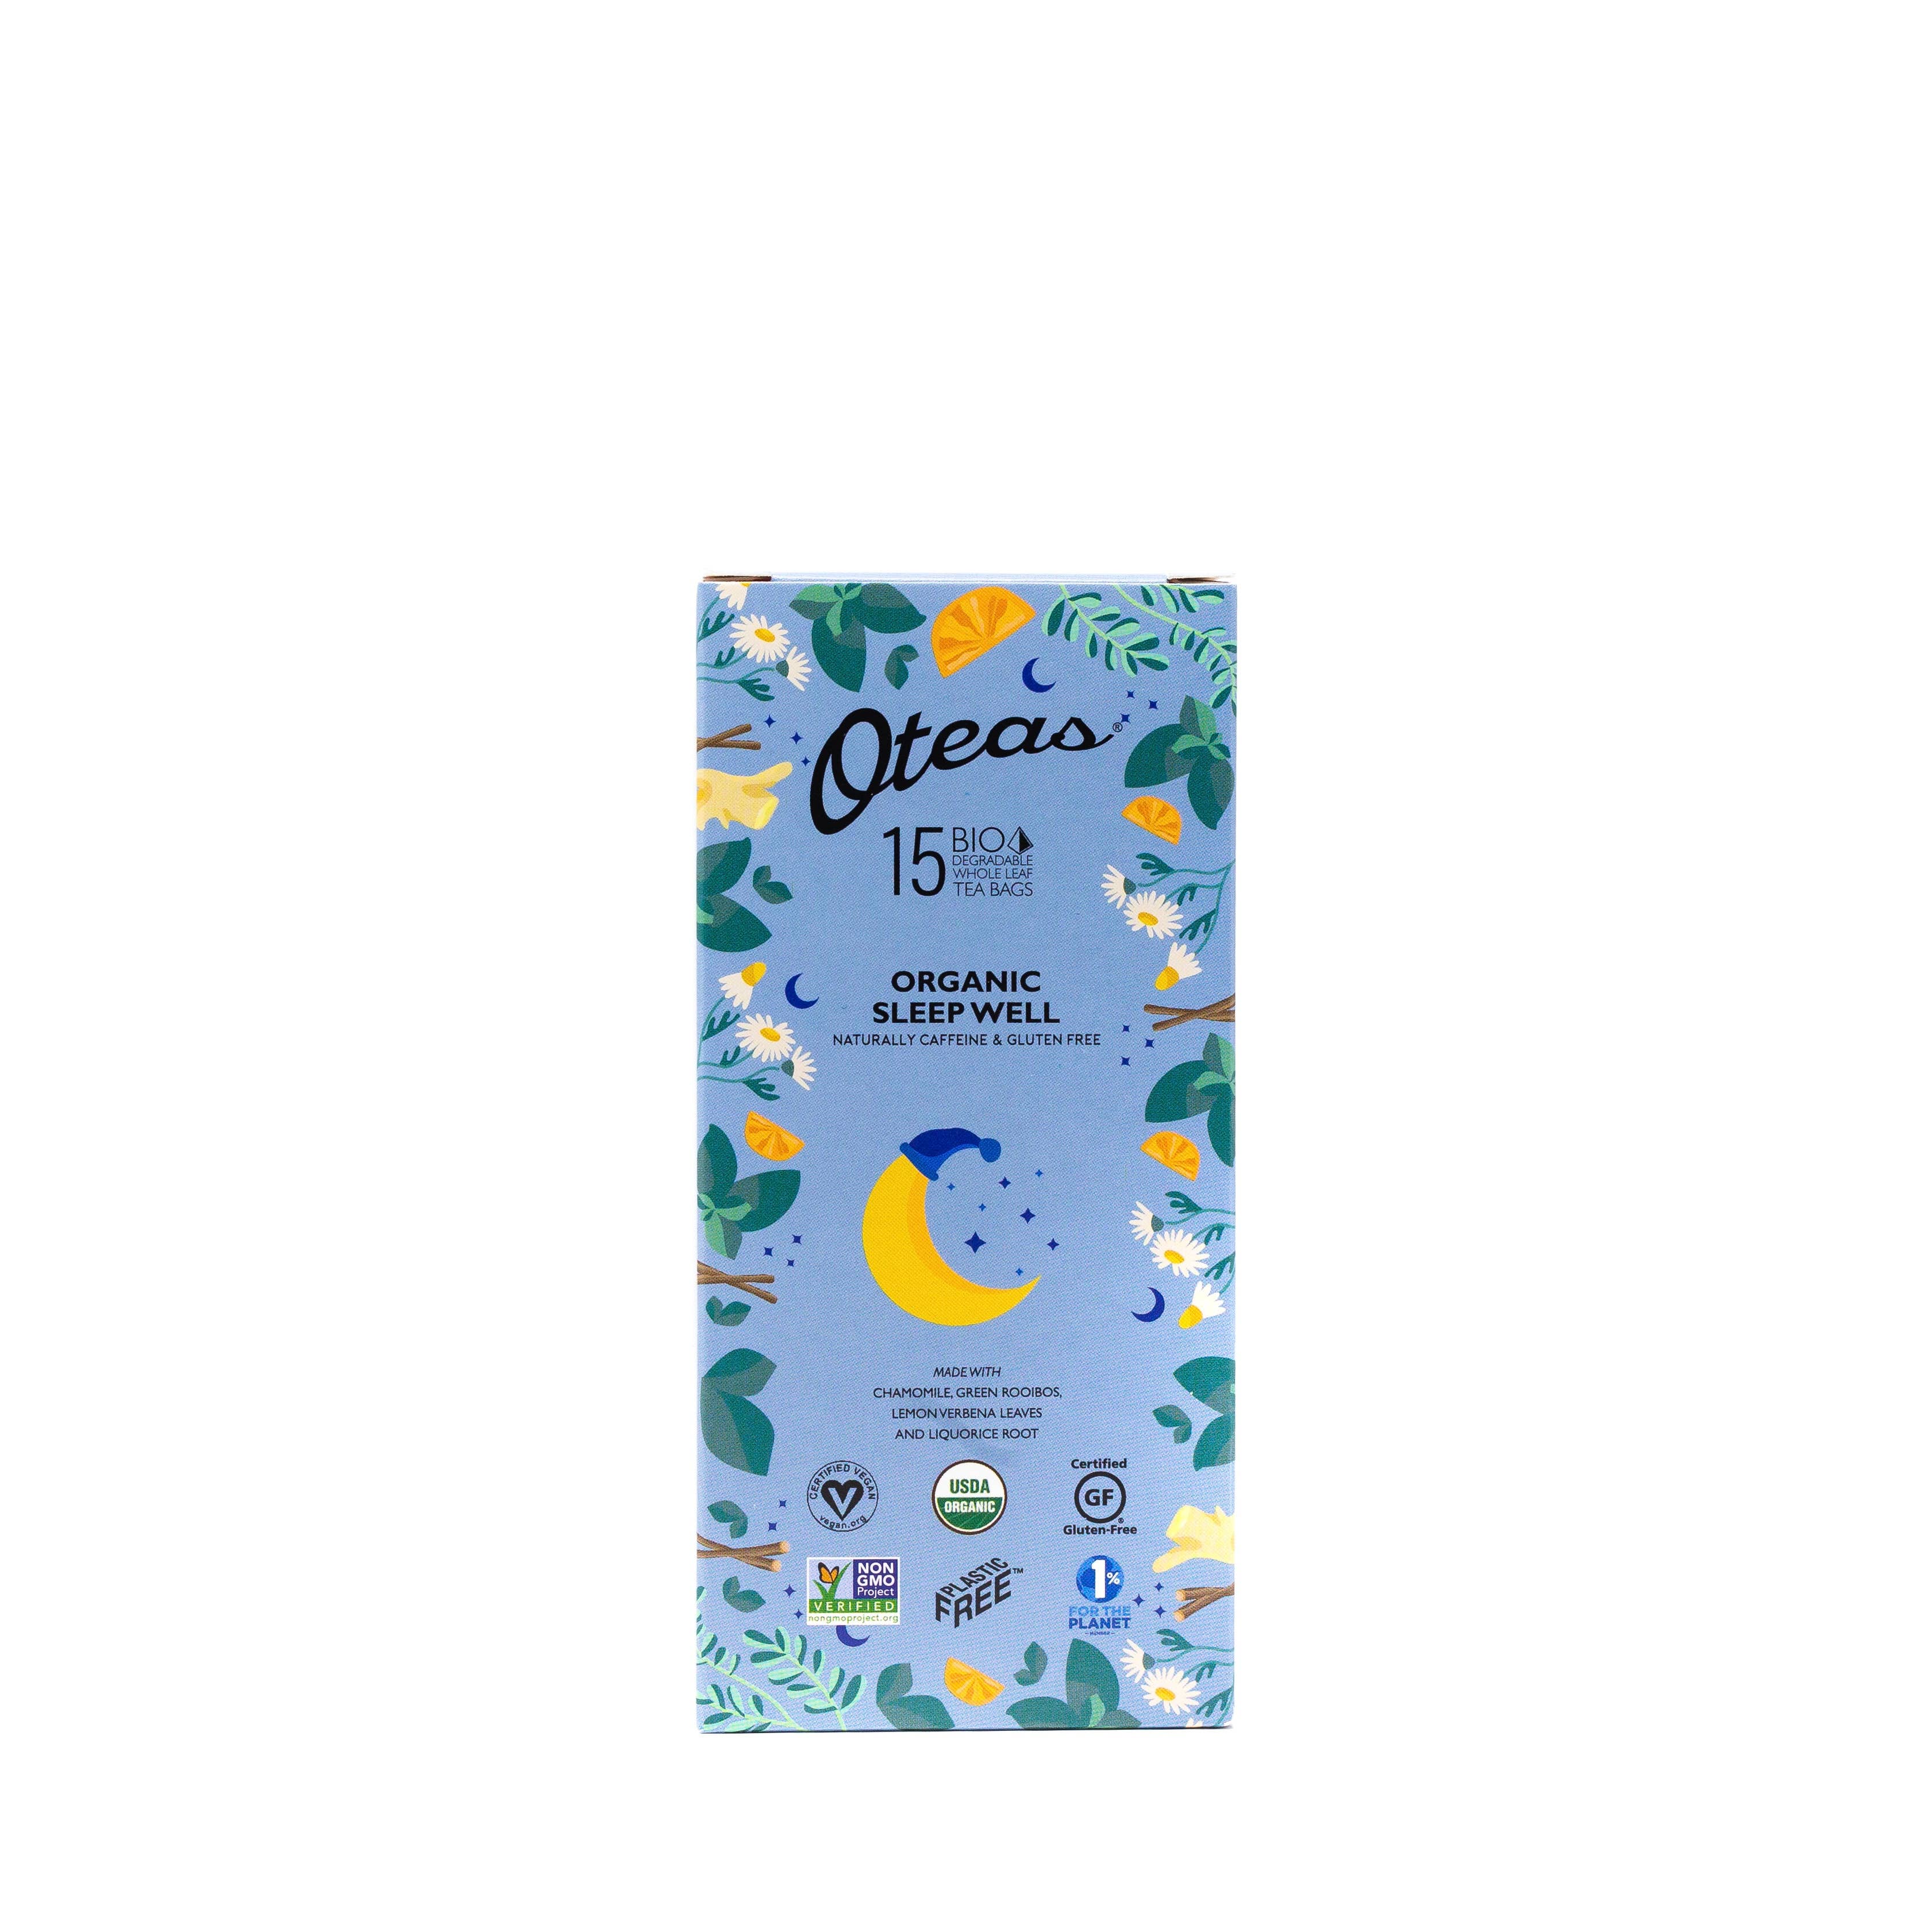 Oteas - Organic Sleep Well